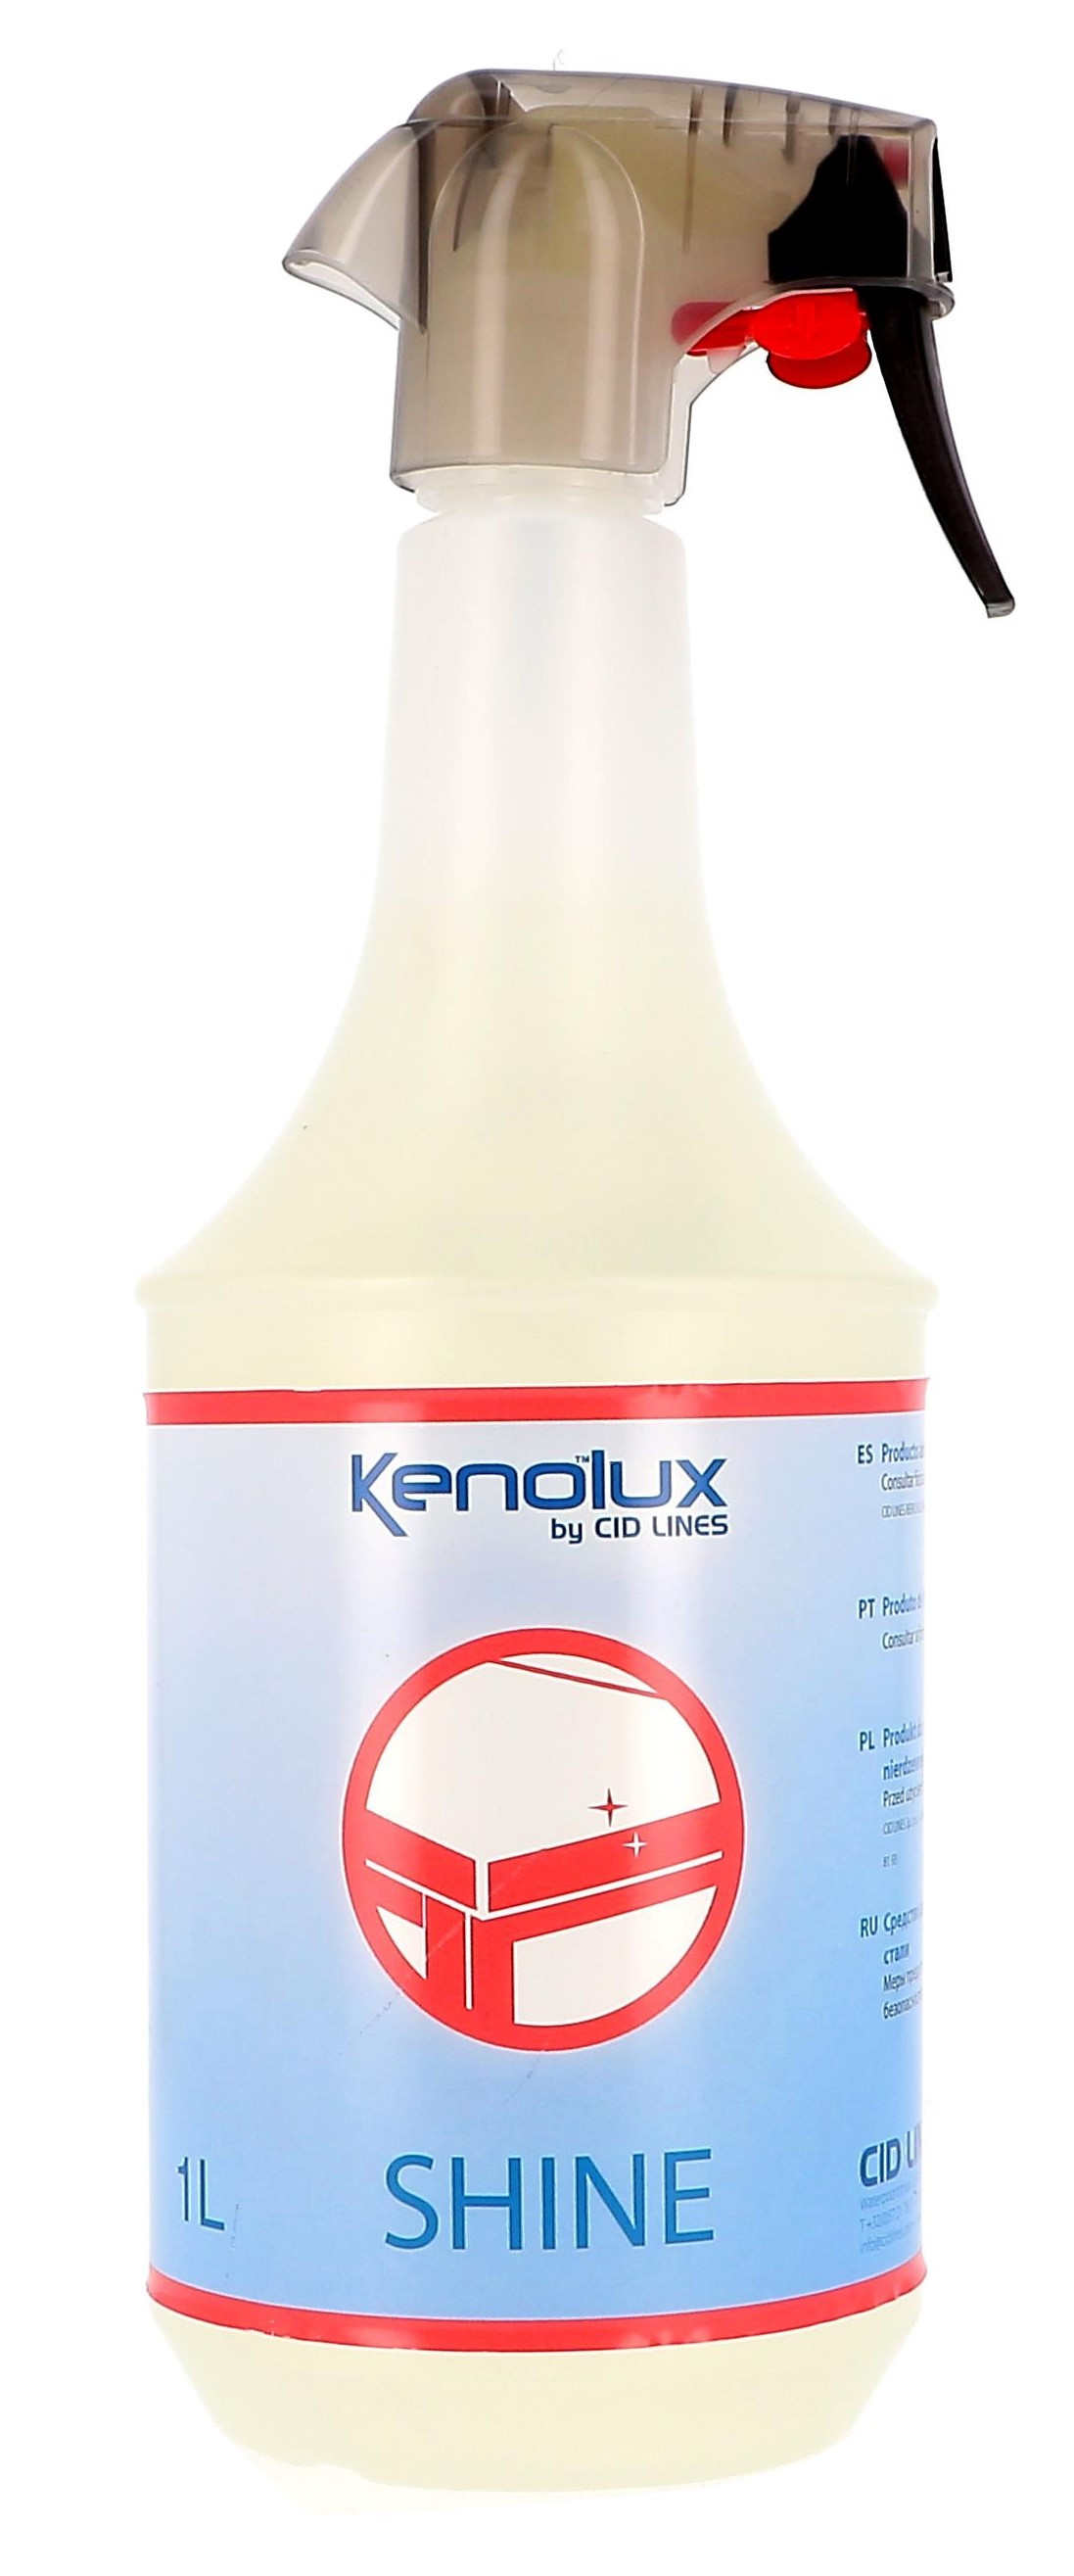 Kenolux Shine 1L Cid Lines nettoyant inox (Reinigings-&kuisproducten)